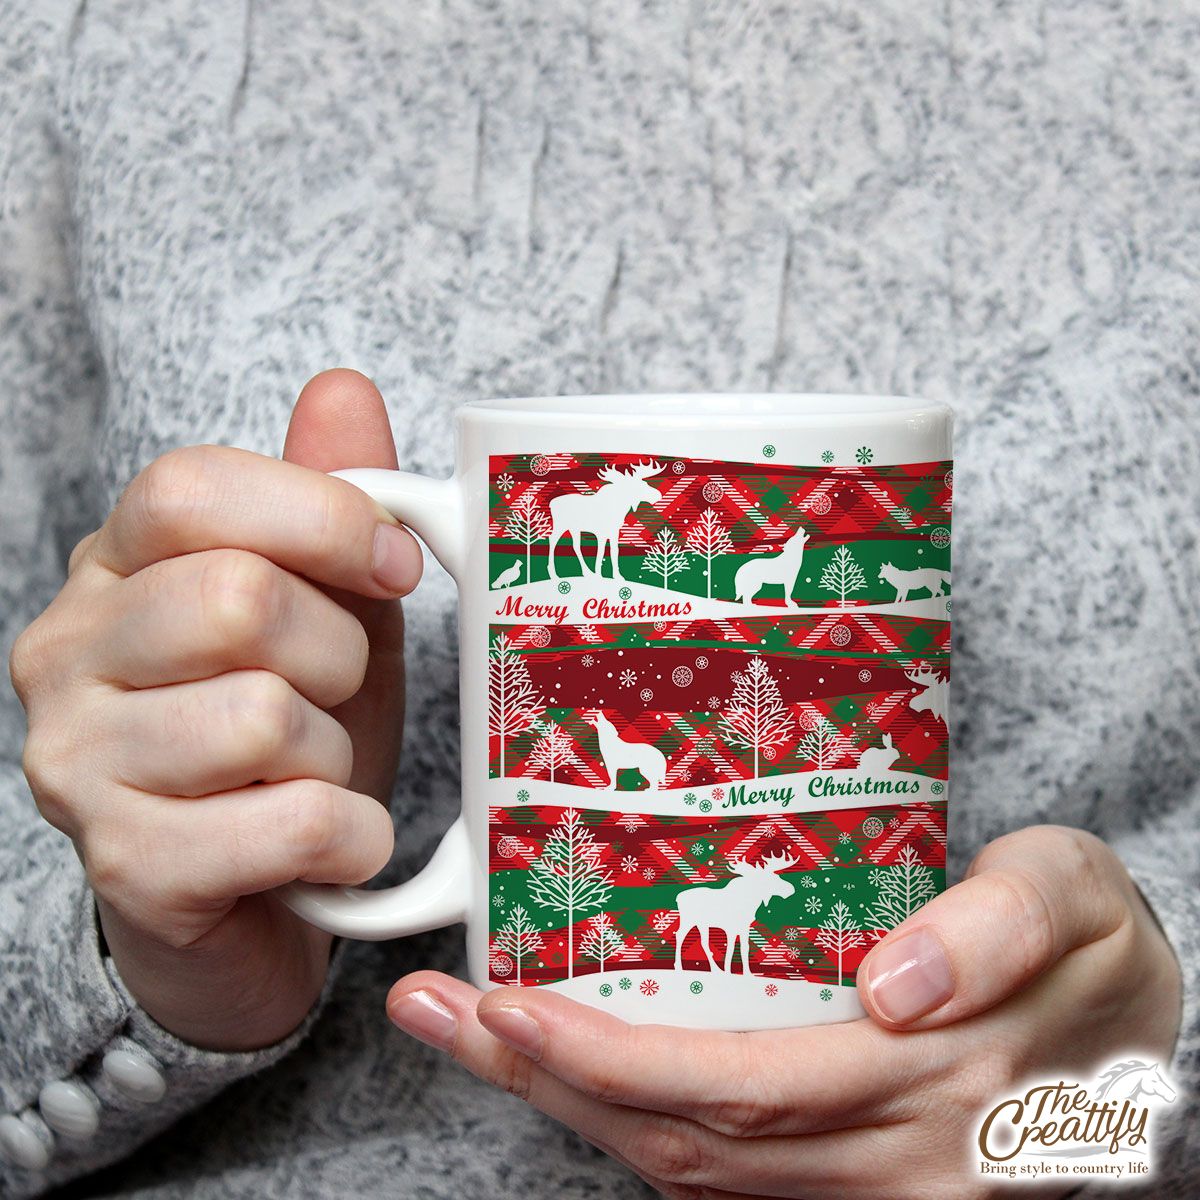 Moose With Merry Christmas Wishes Ceramic Mug